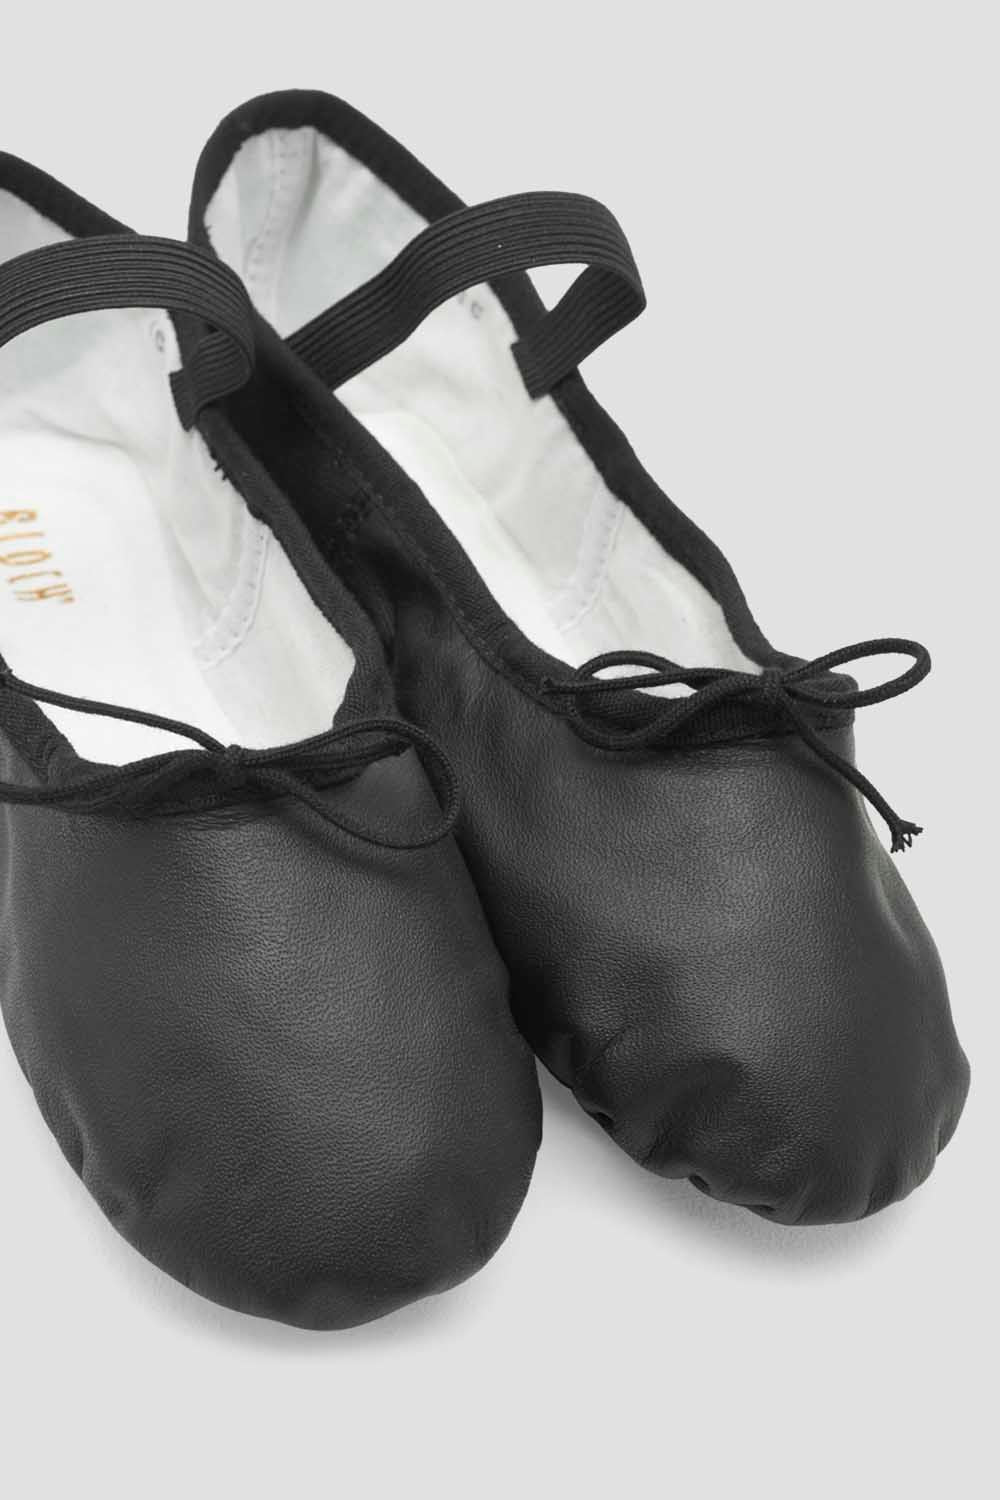 Zapatillas de ballet de cuero Arise para niñas, blancas